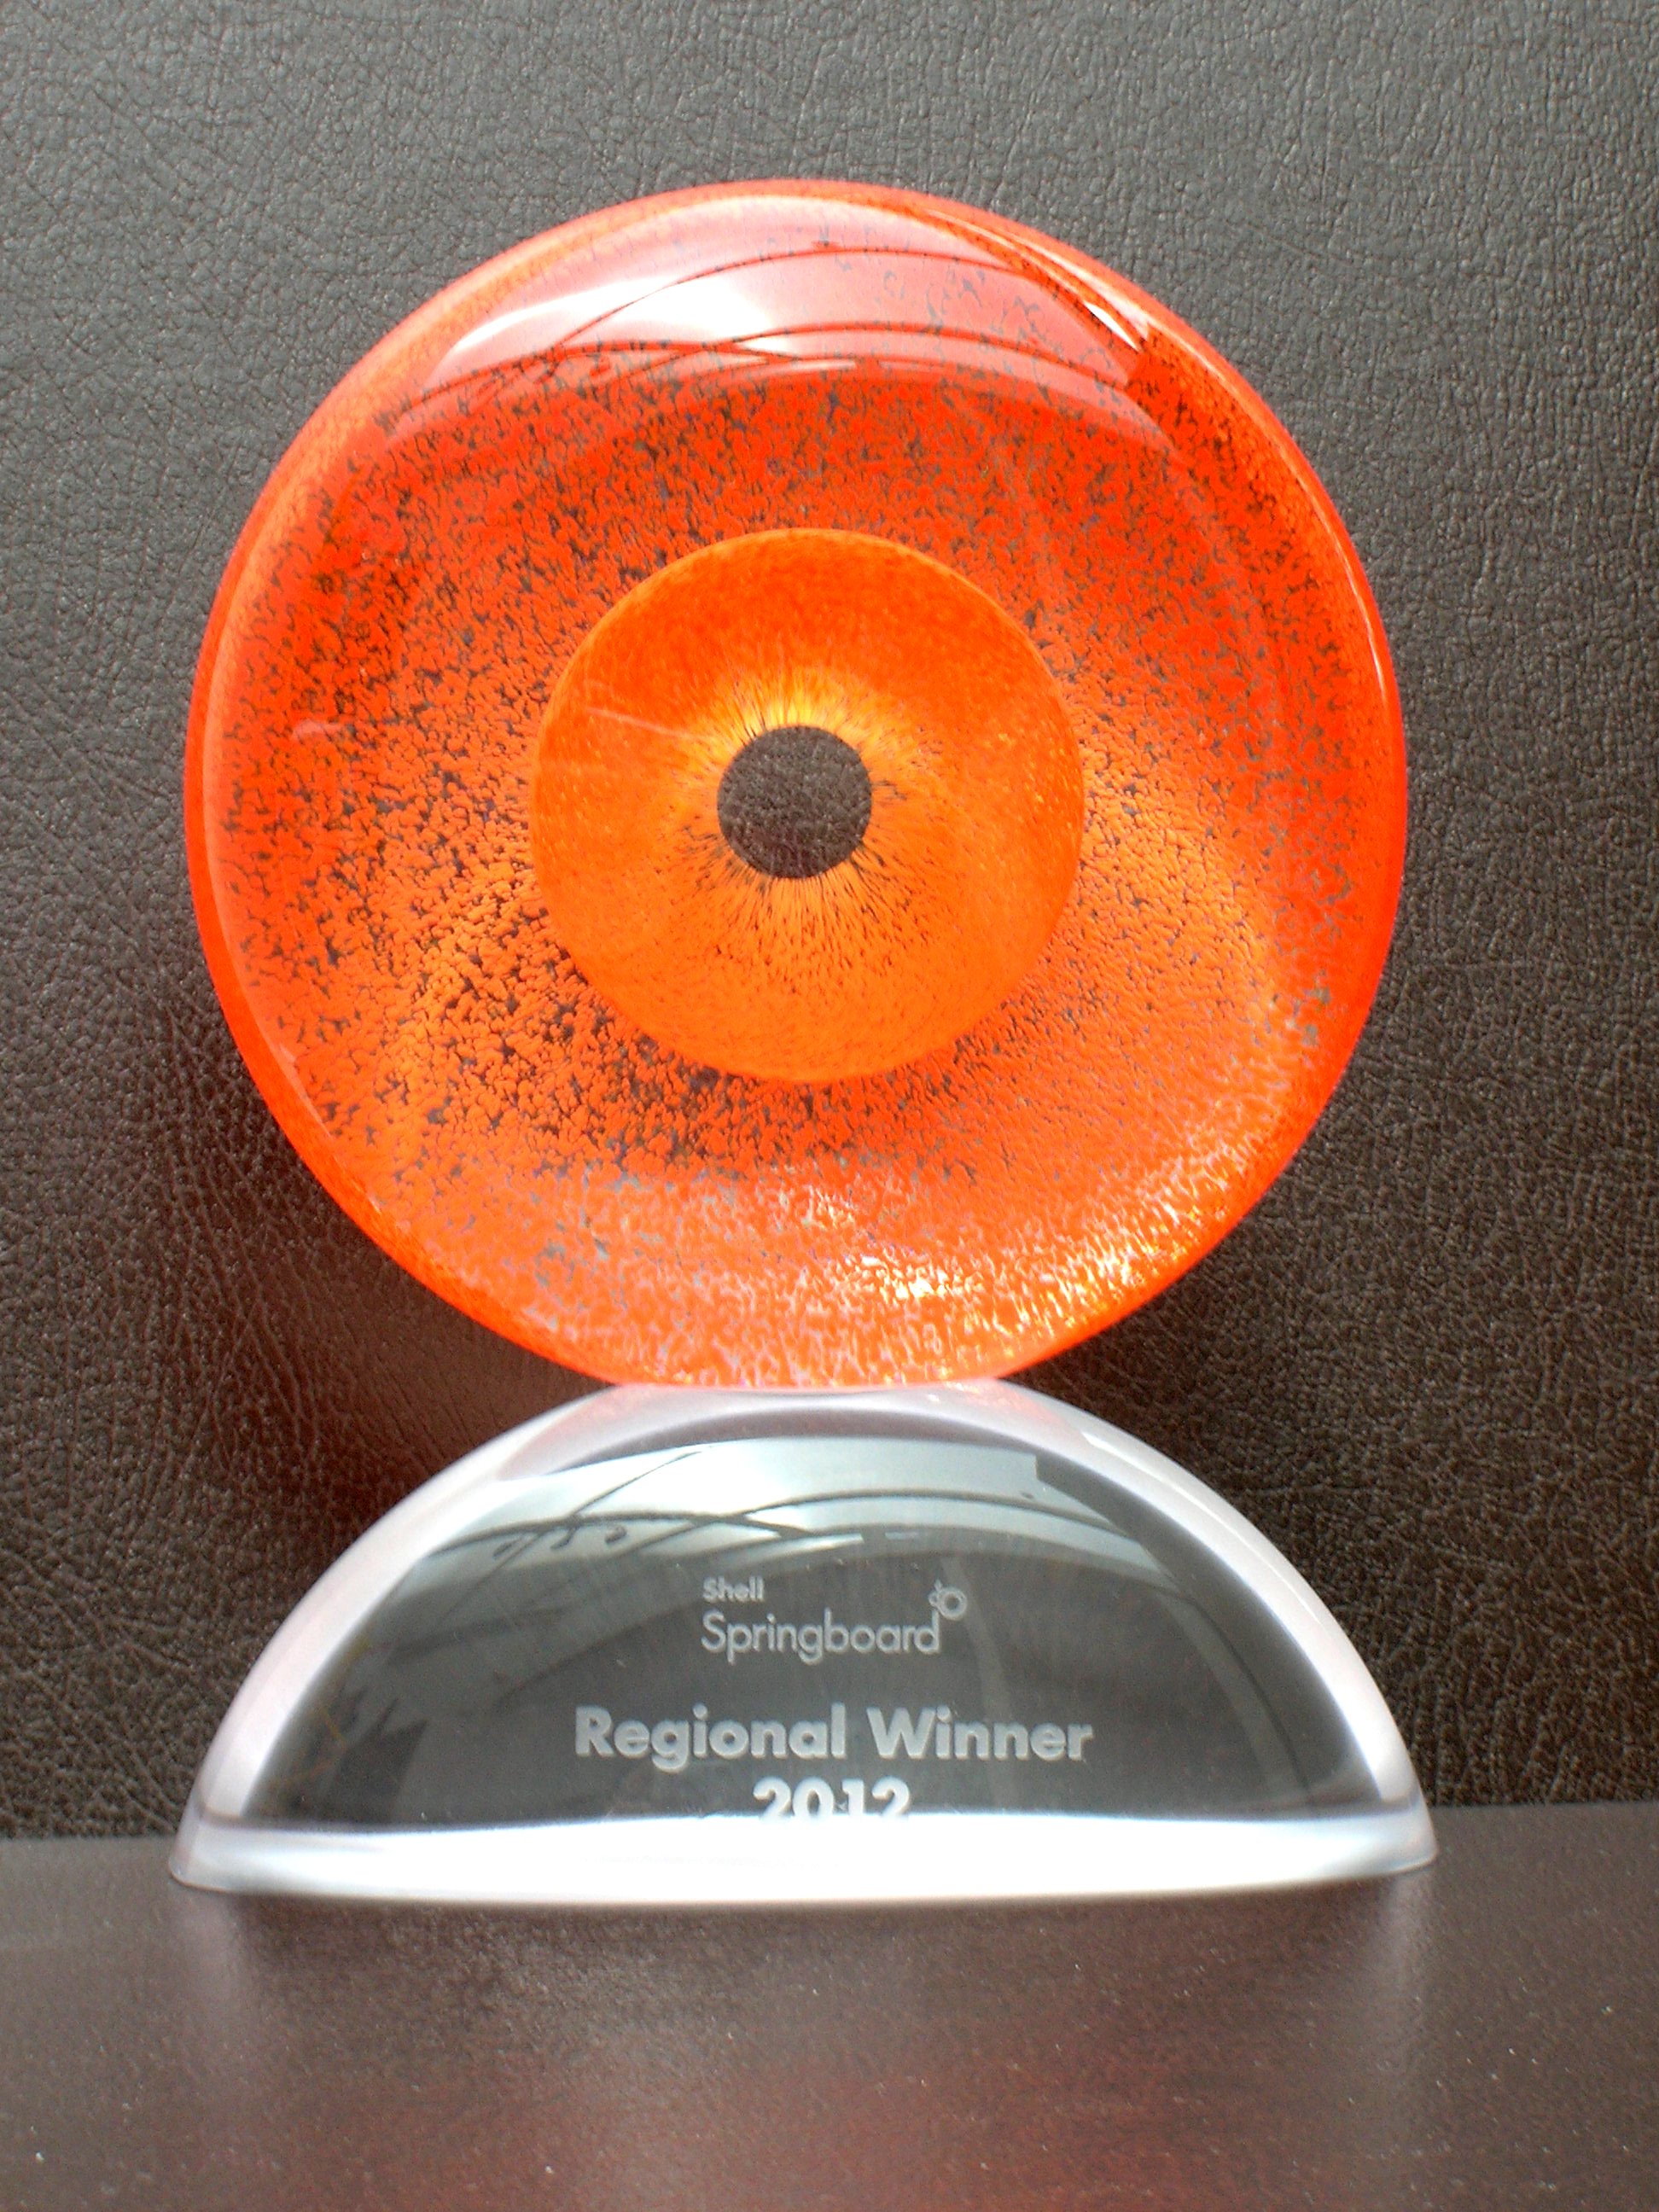 Shell trophy